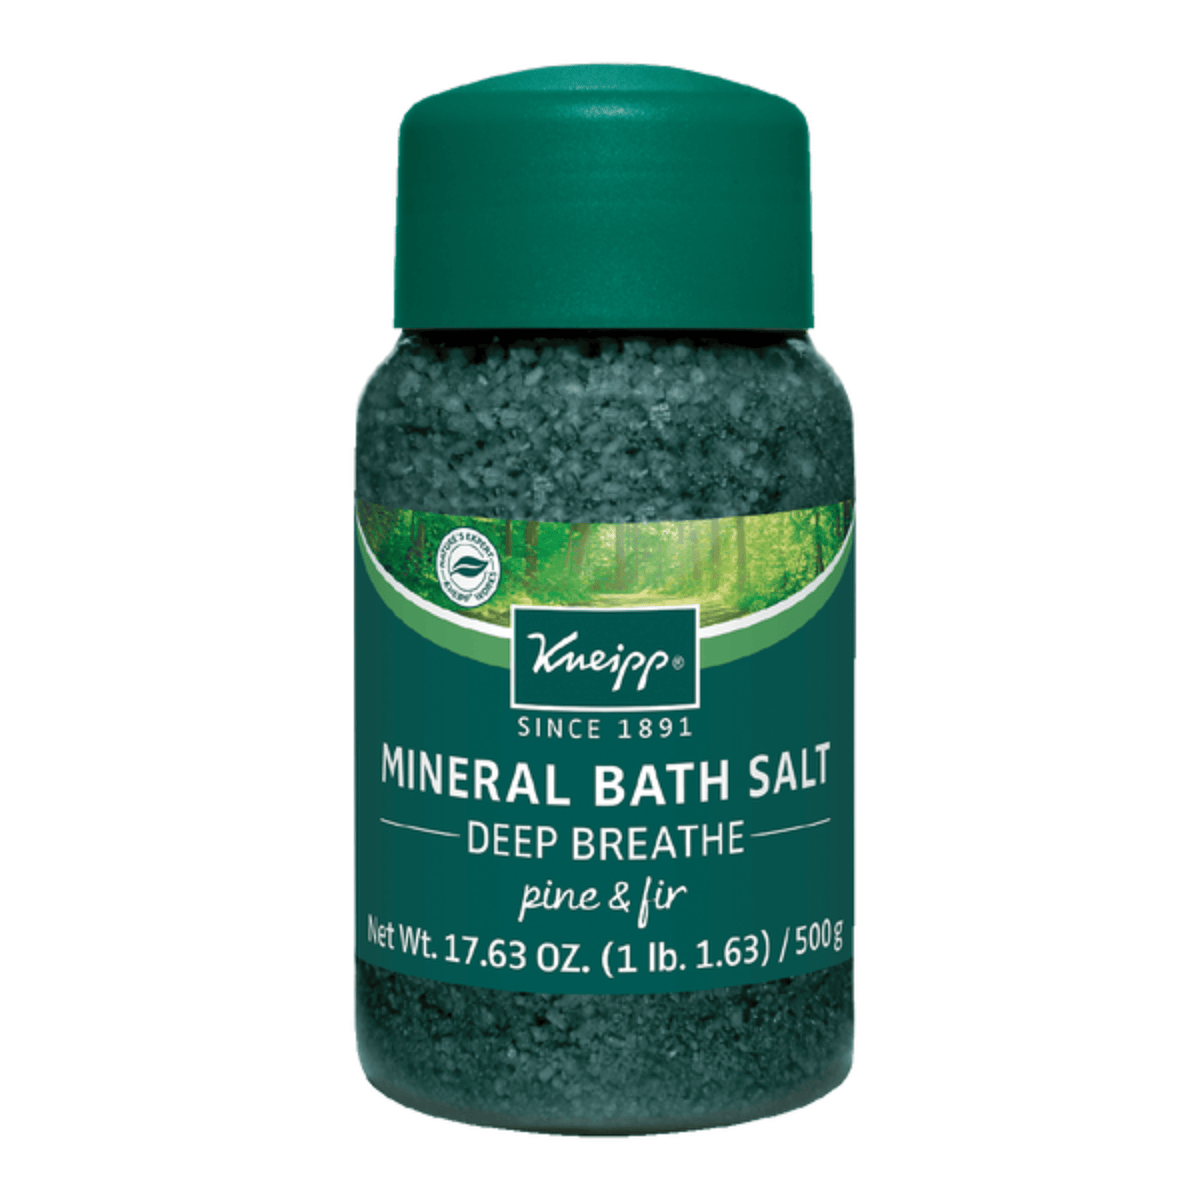 Primary Image of Pine & Fir Deep Breathe Bath Salt